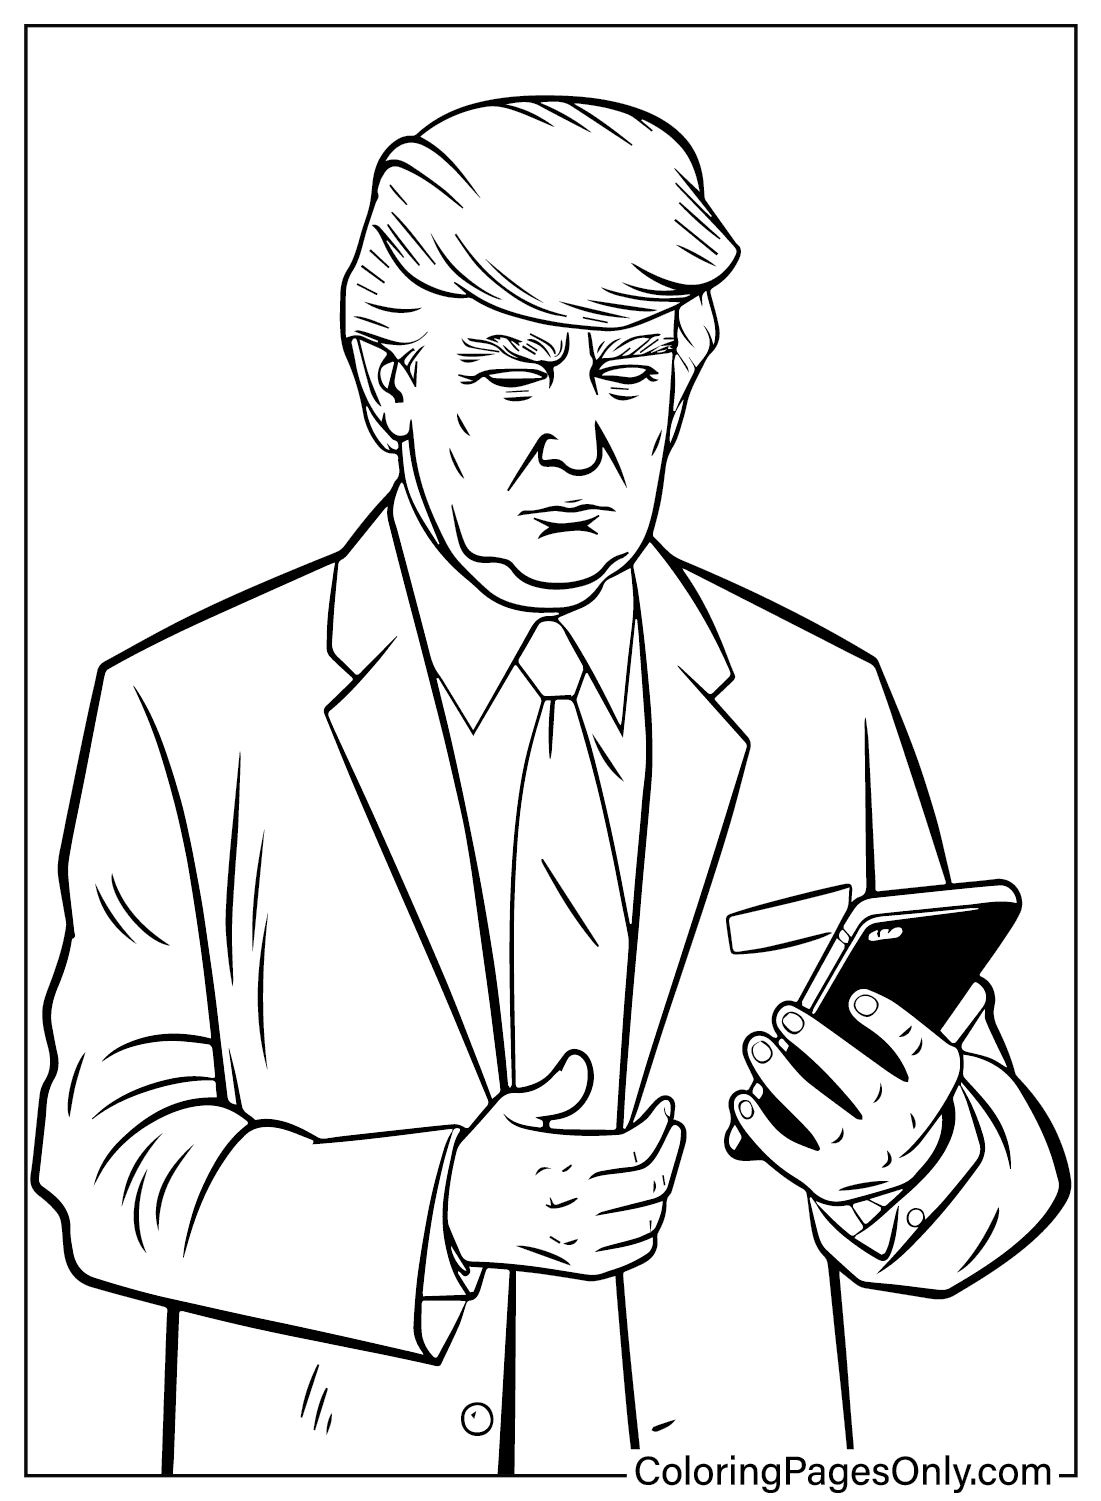 Página para colorear de Donald Trump de Donald Trump